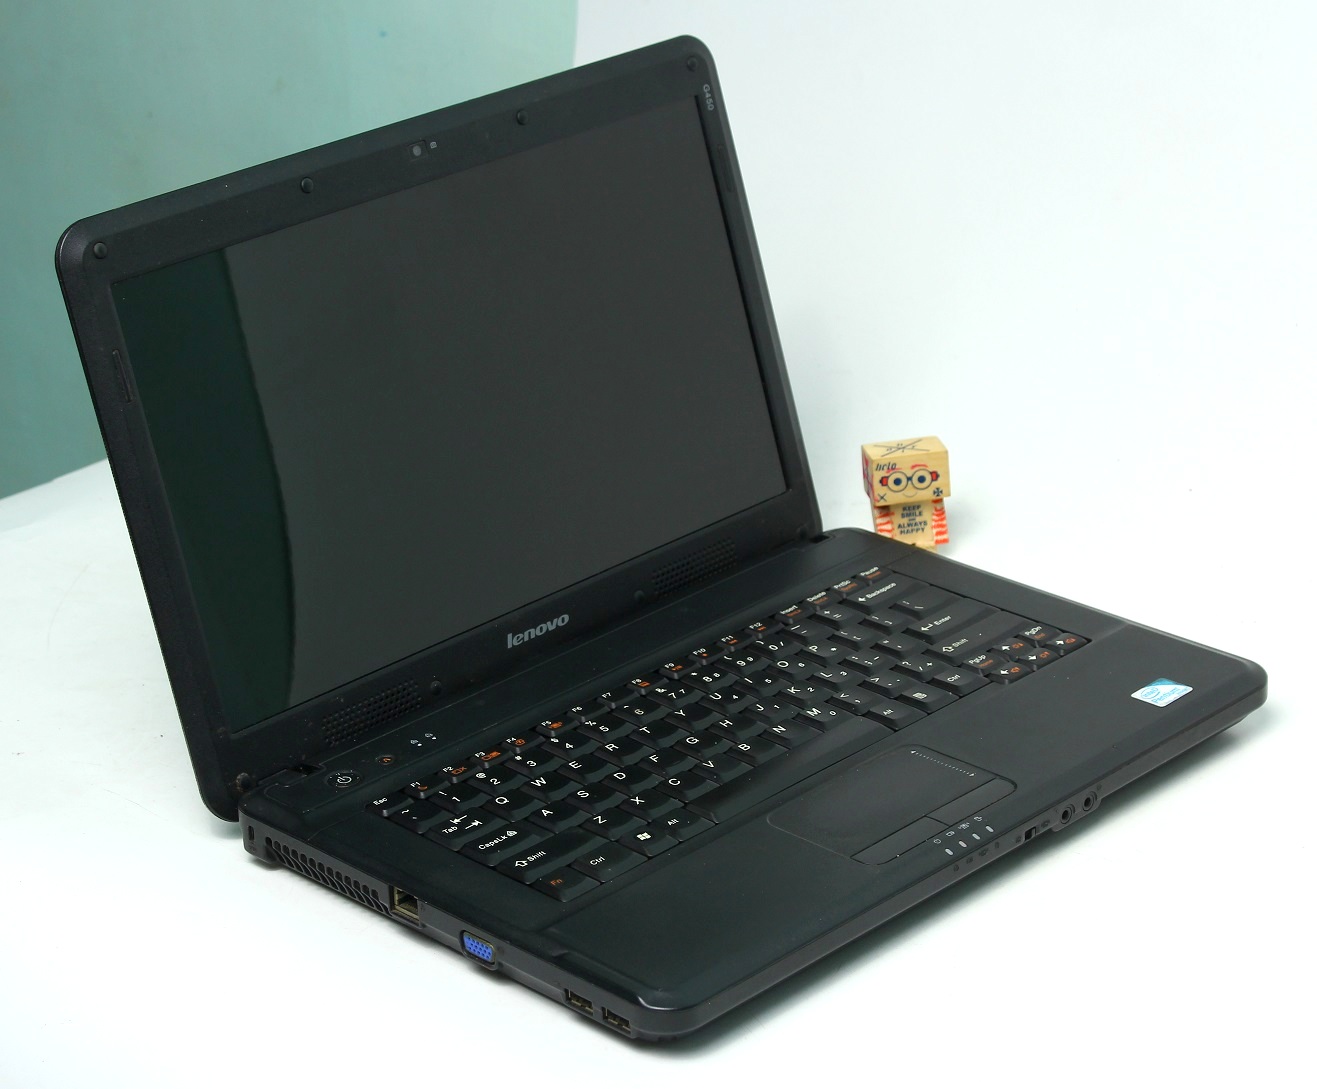 Jual laptop lenovo G450 Bekas | Jual Beli Laptop Second